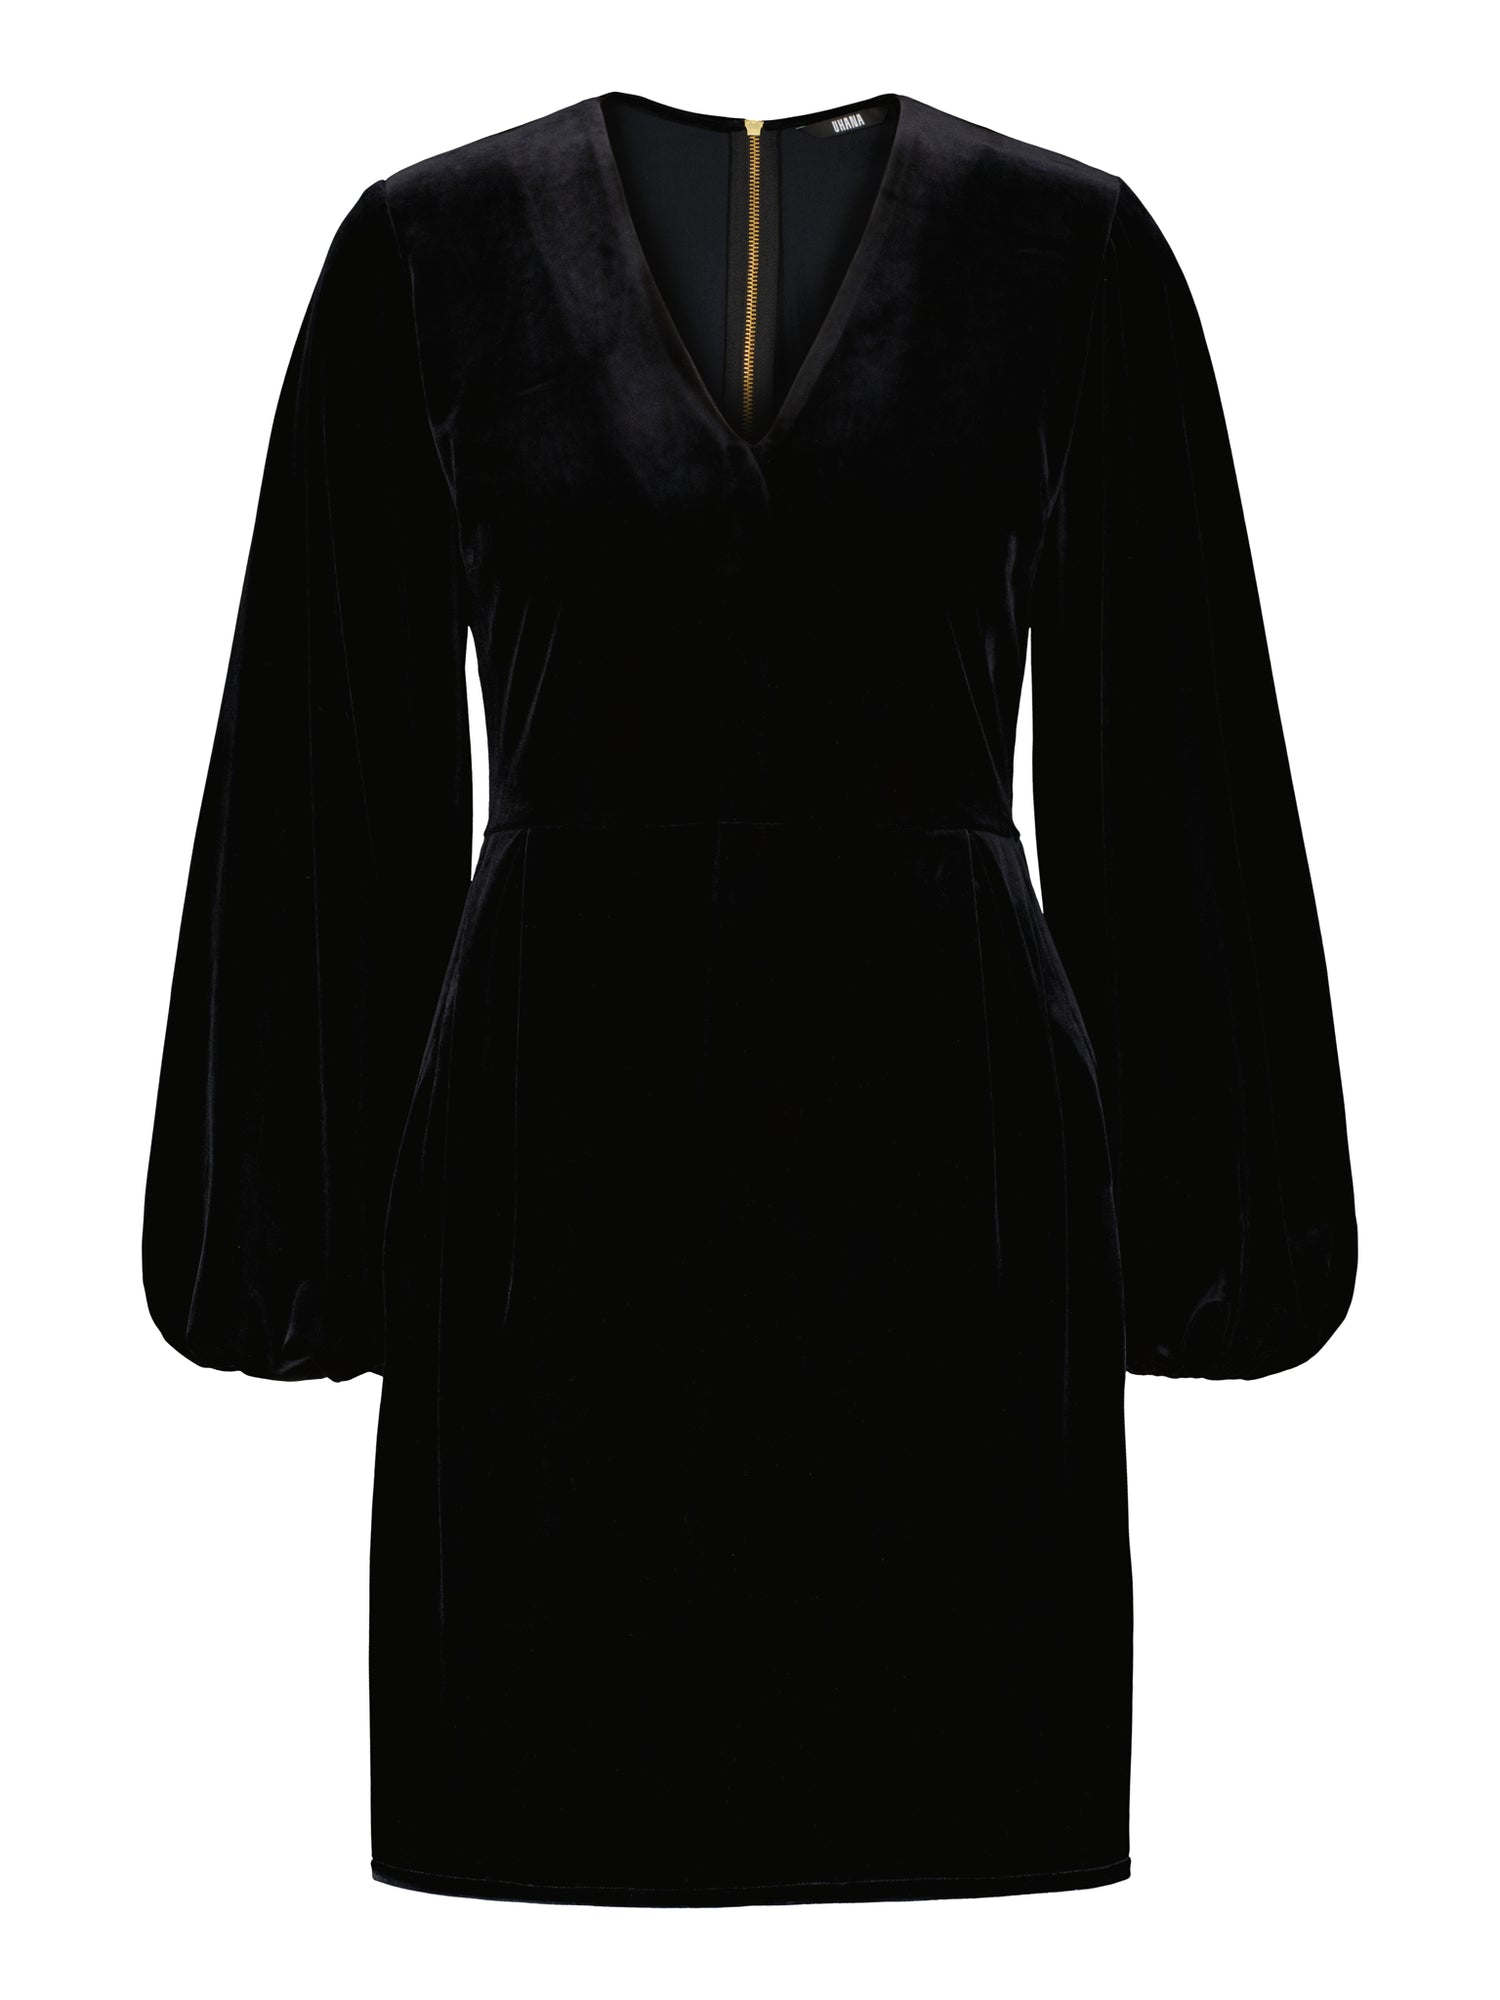 Kielo Dress, Velvet Black